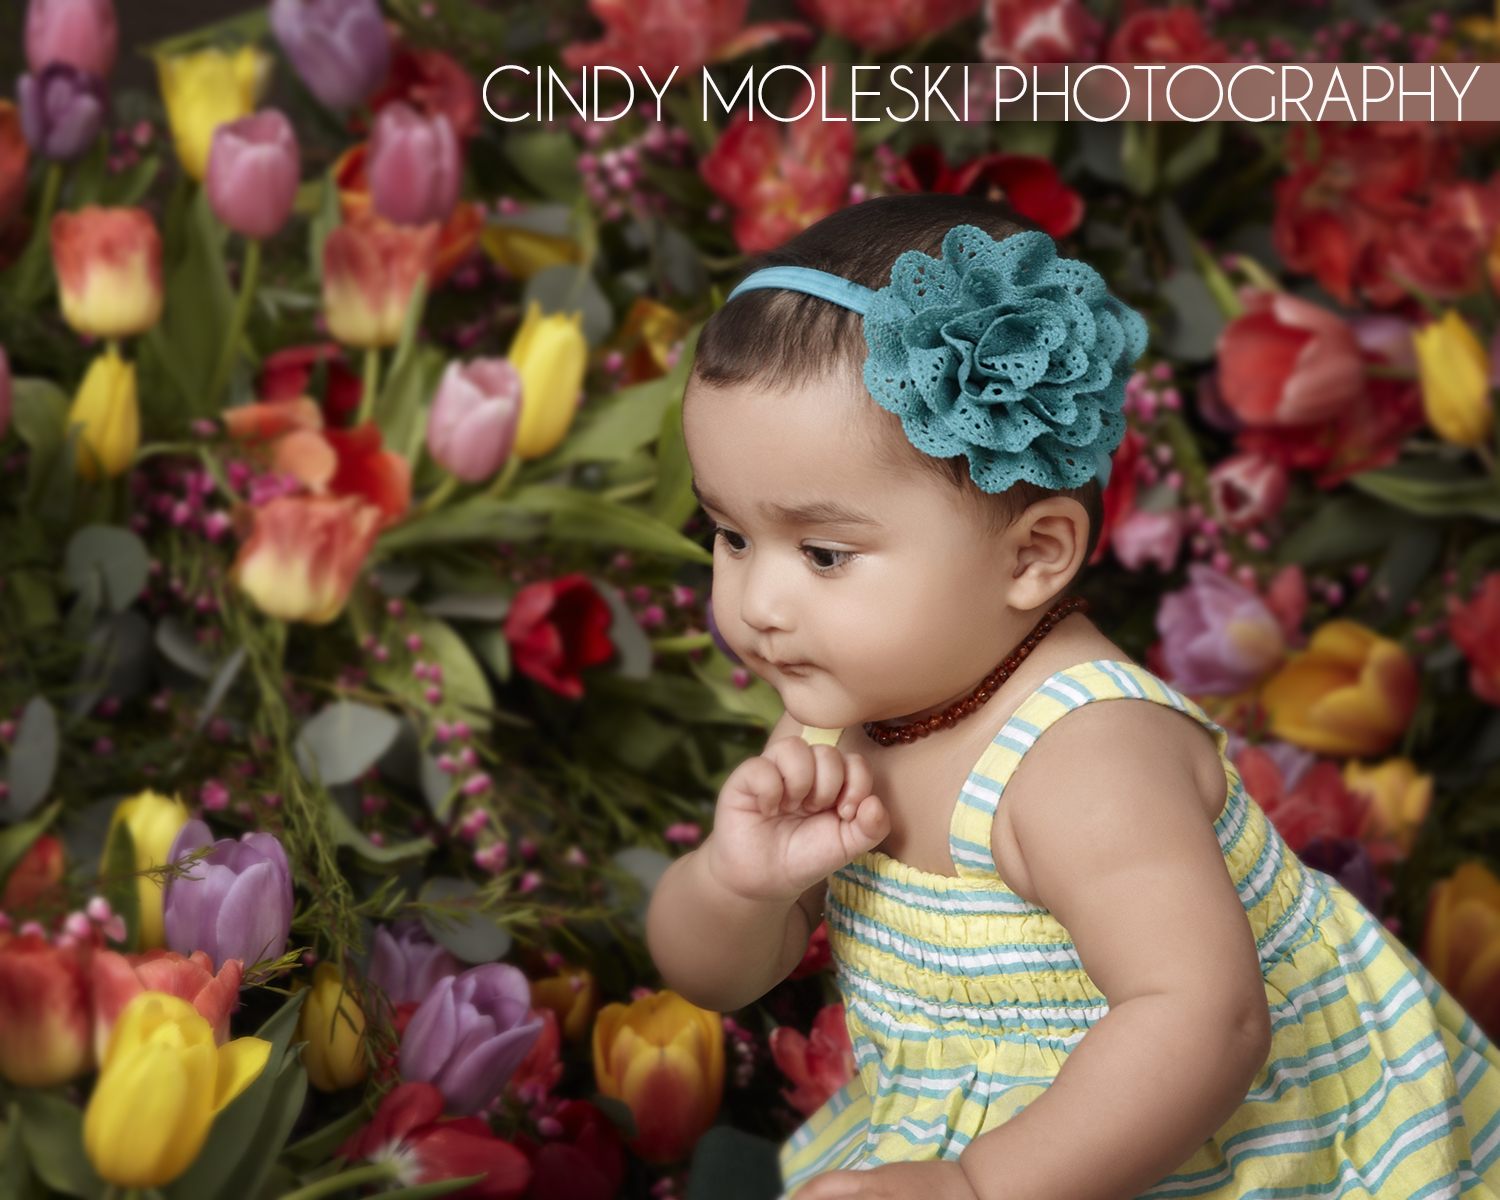 professional-garden-baby-photographer-saskatoon-cindy-moleski-28510-9468FB.jpg